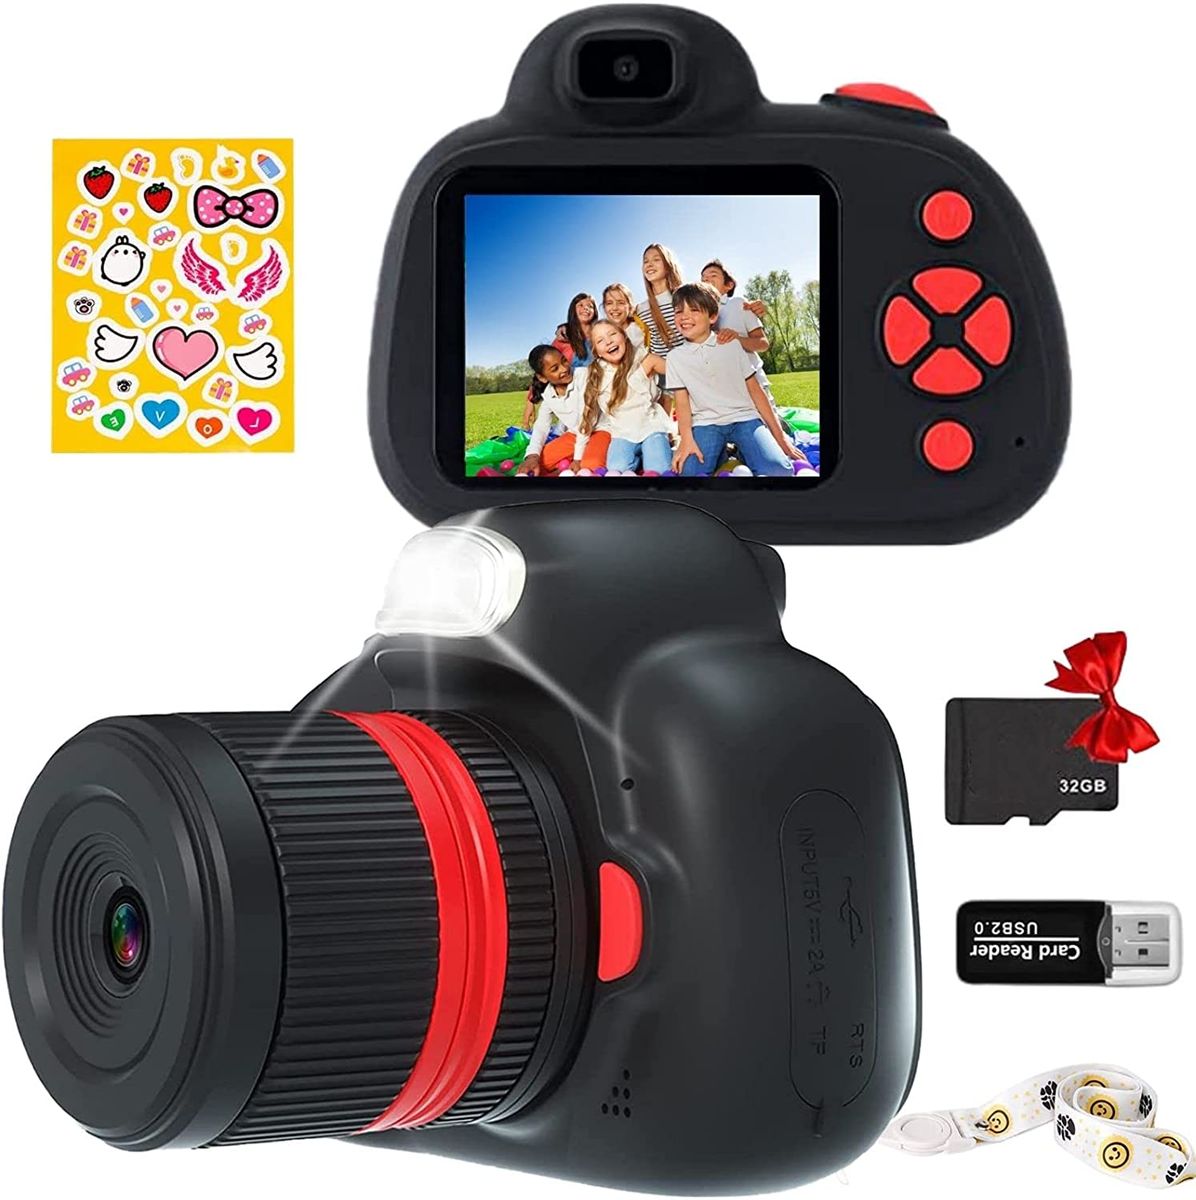 SLR Kinderkamera 1080P HD 28 MP Selfie Kinder Kamera Digital mit Doppelobjektiv, Blitz, AF, MF, 20X Zoom, 1200mAh Akku, 2,4” IPS, 32G Karte inklusive Geburtstagsgeschenk für Jungen Mädchen - Schwarz SLR Black